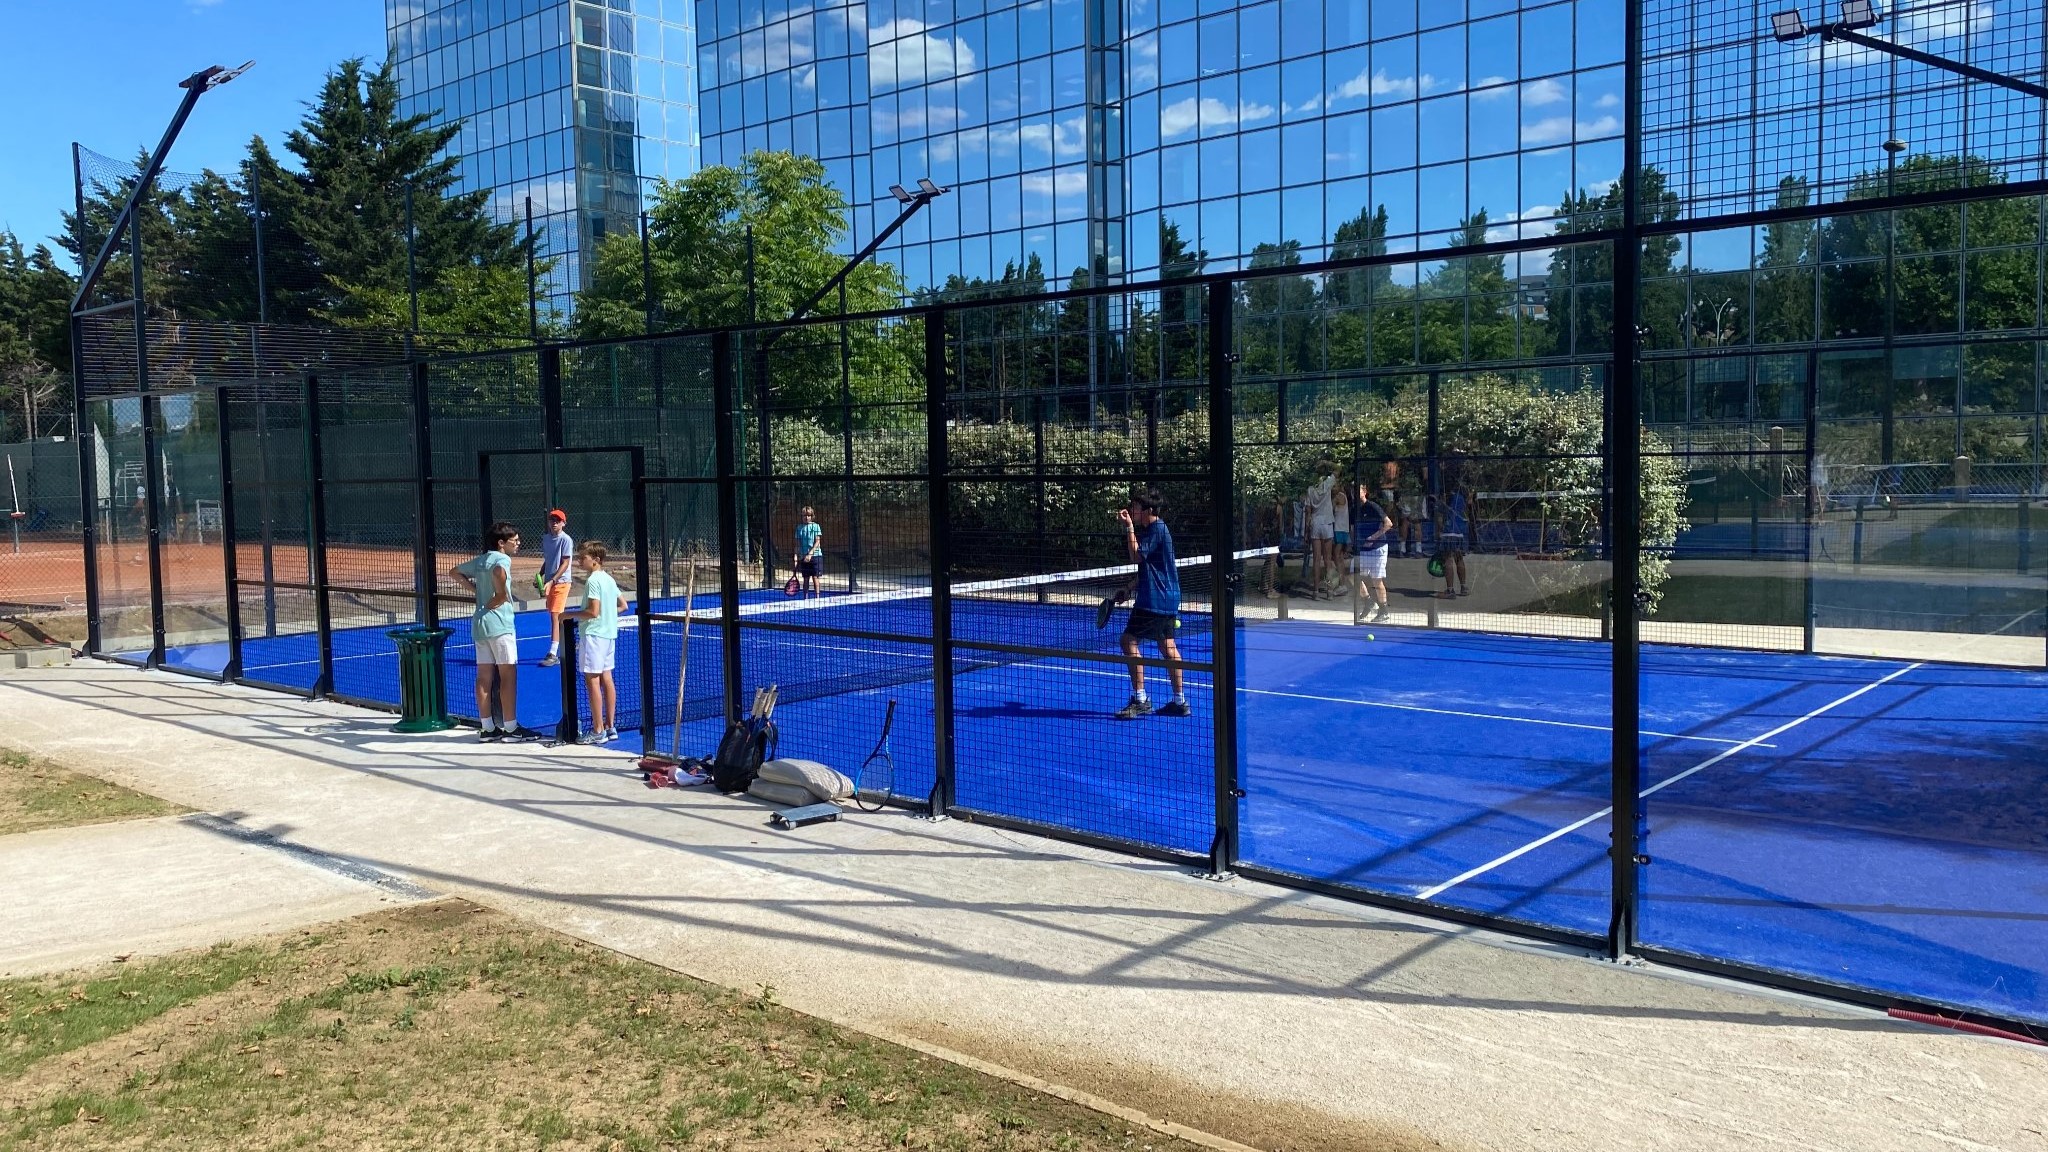 Tennis Club de Paris: due nuovi campi nel cuore di Parigi